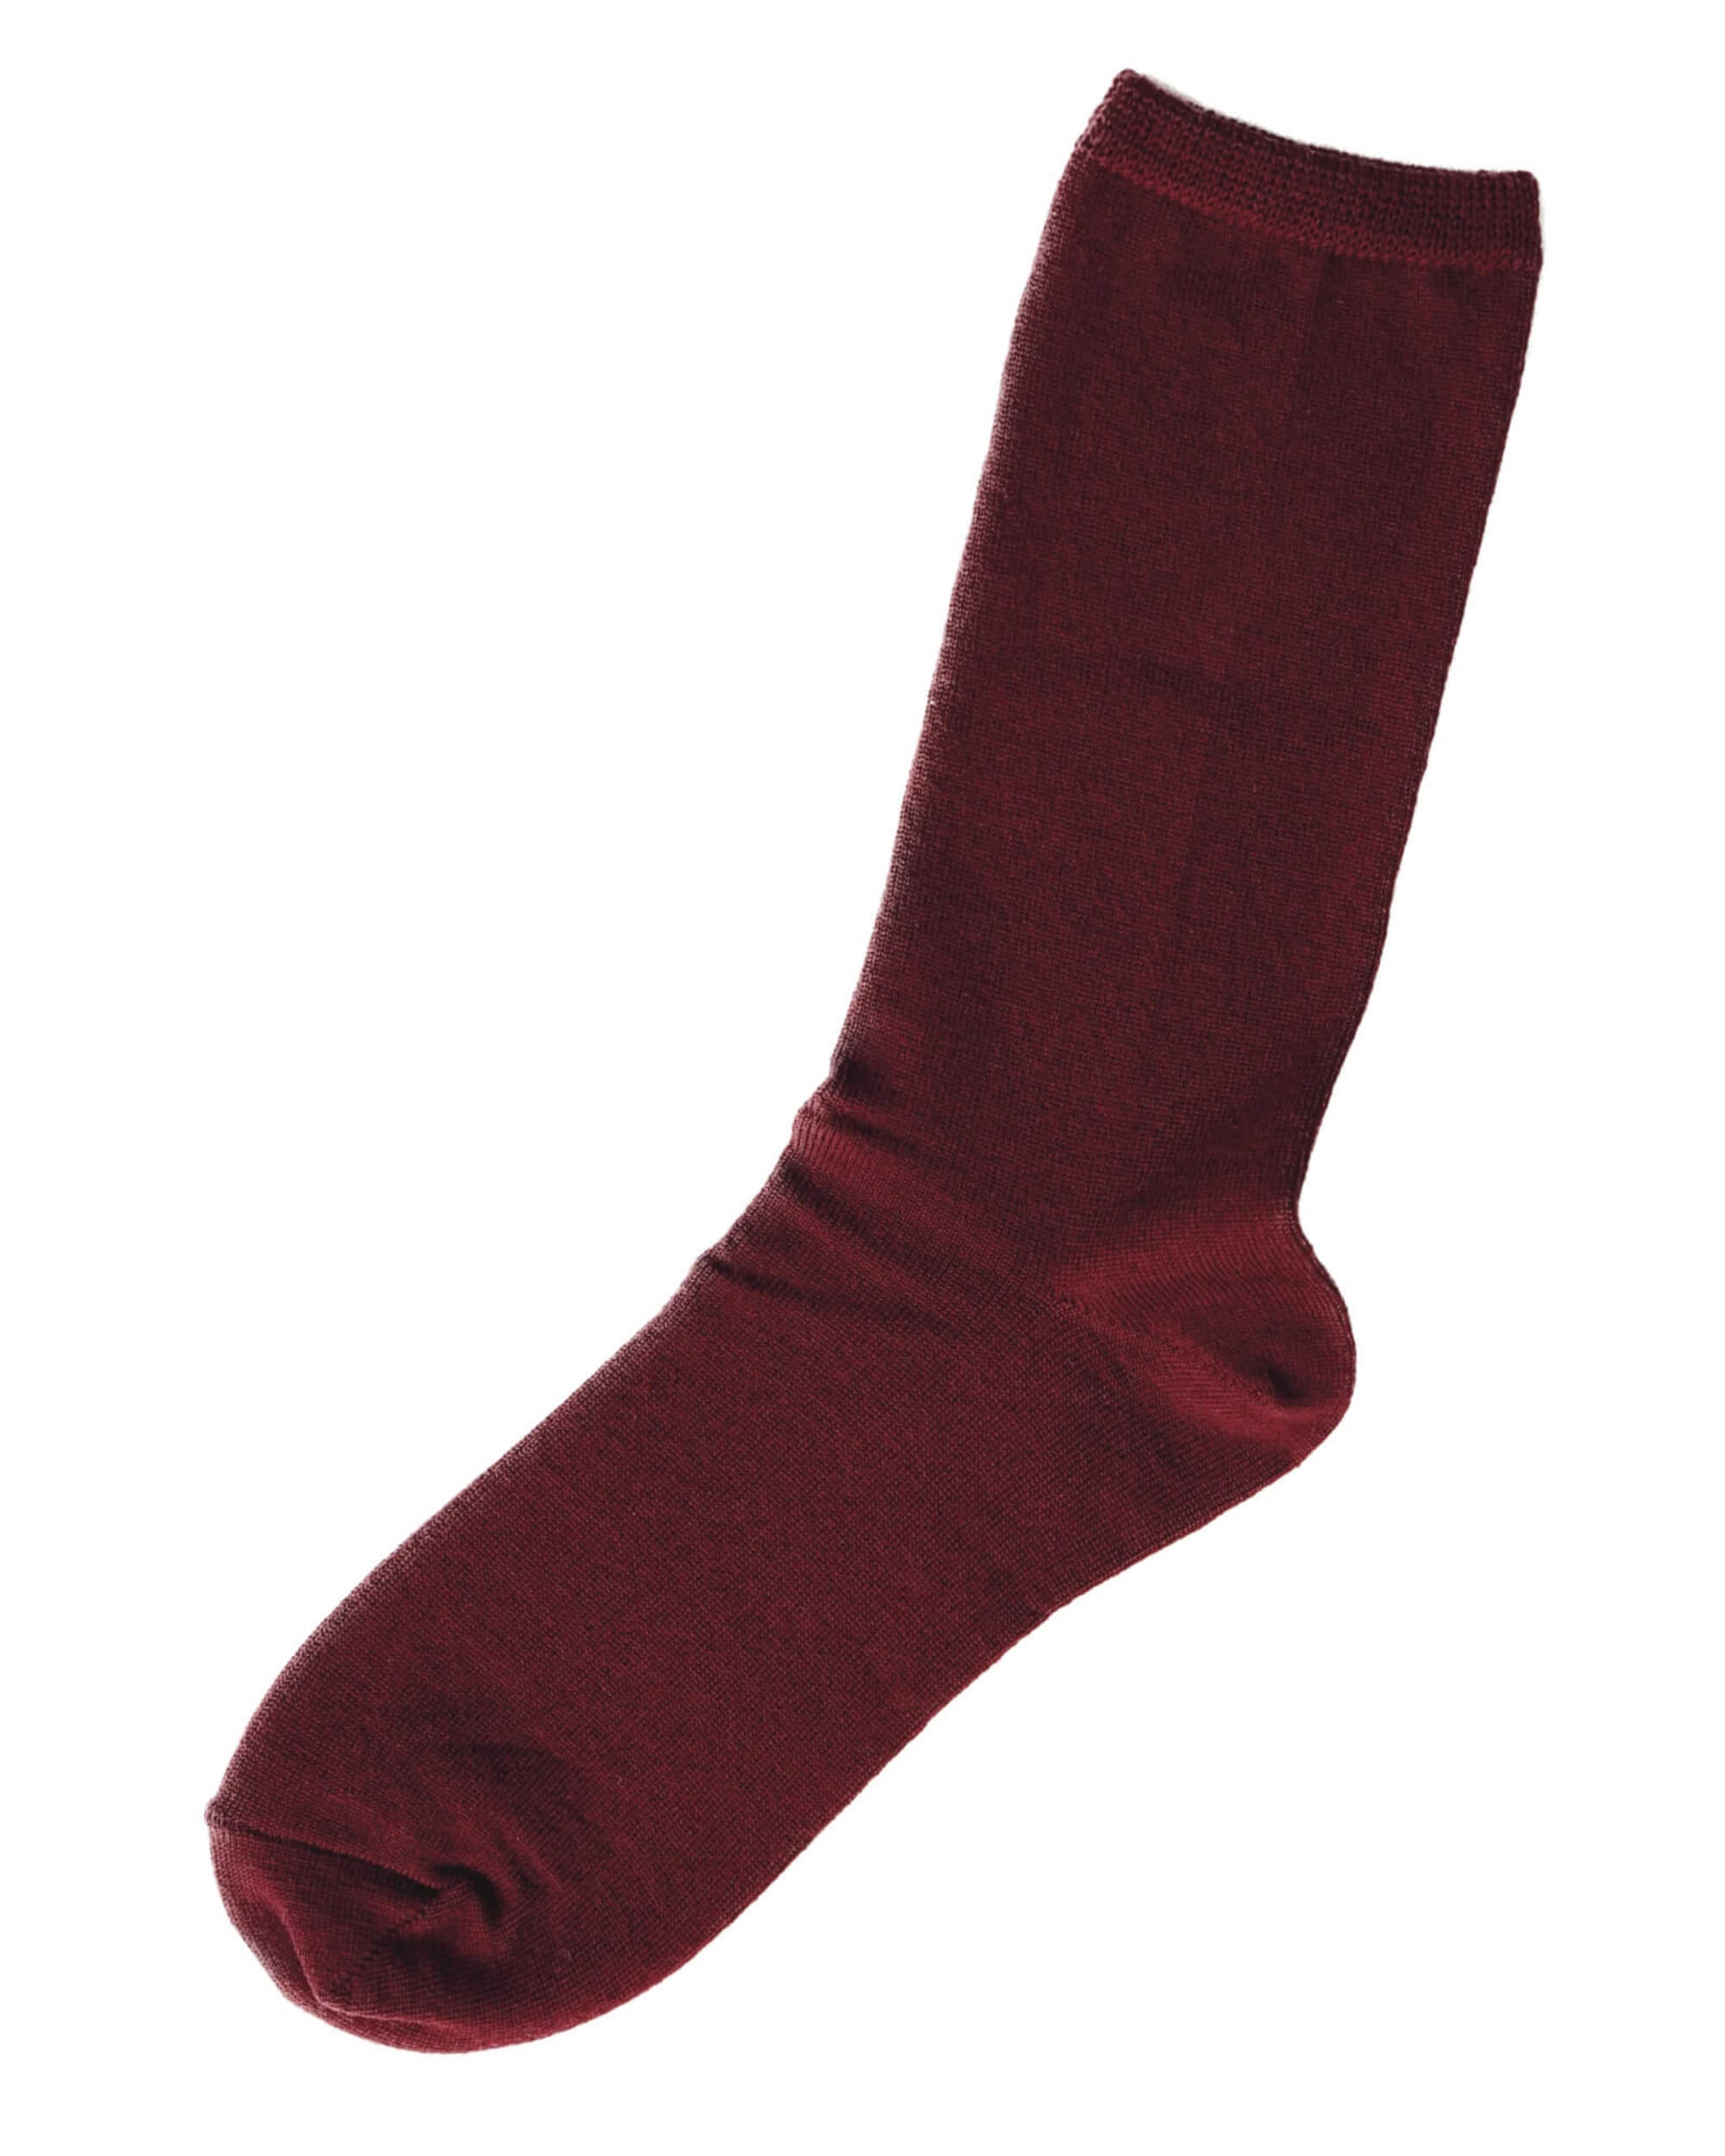 memeri : merino wool socks